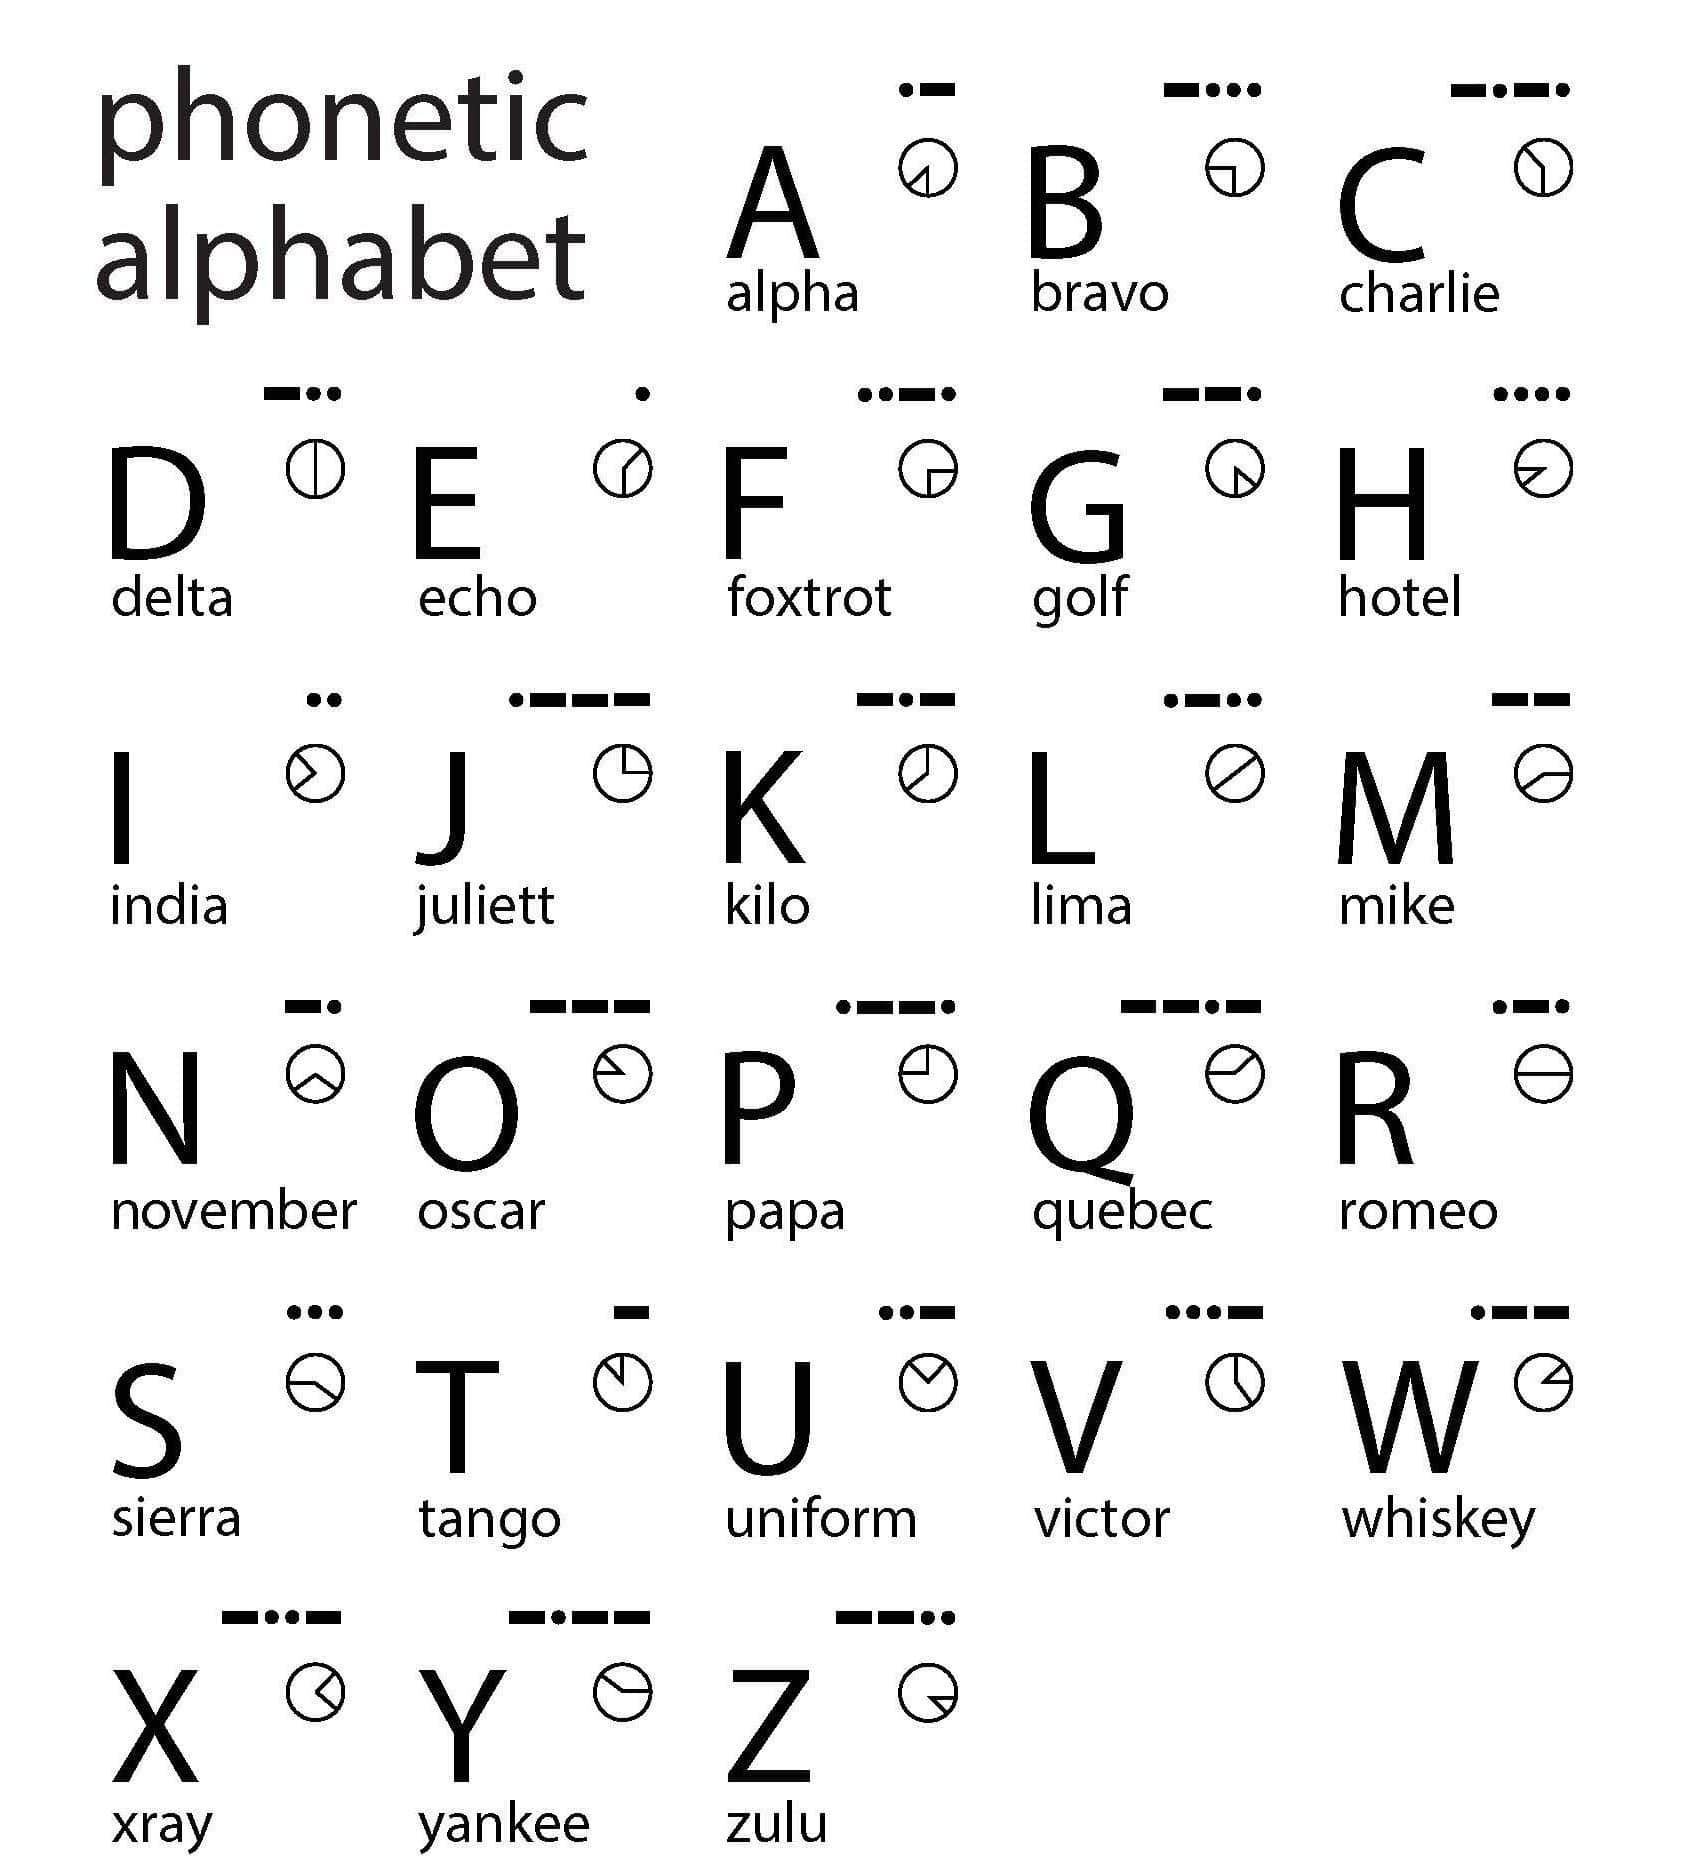 printable-phonetic-alphabet-military